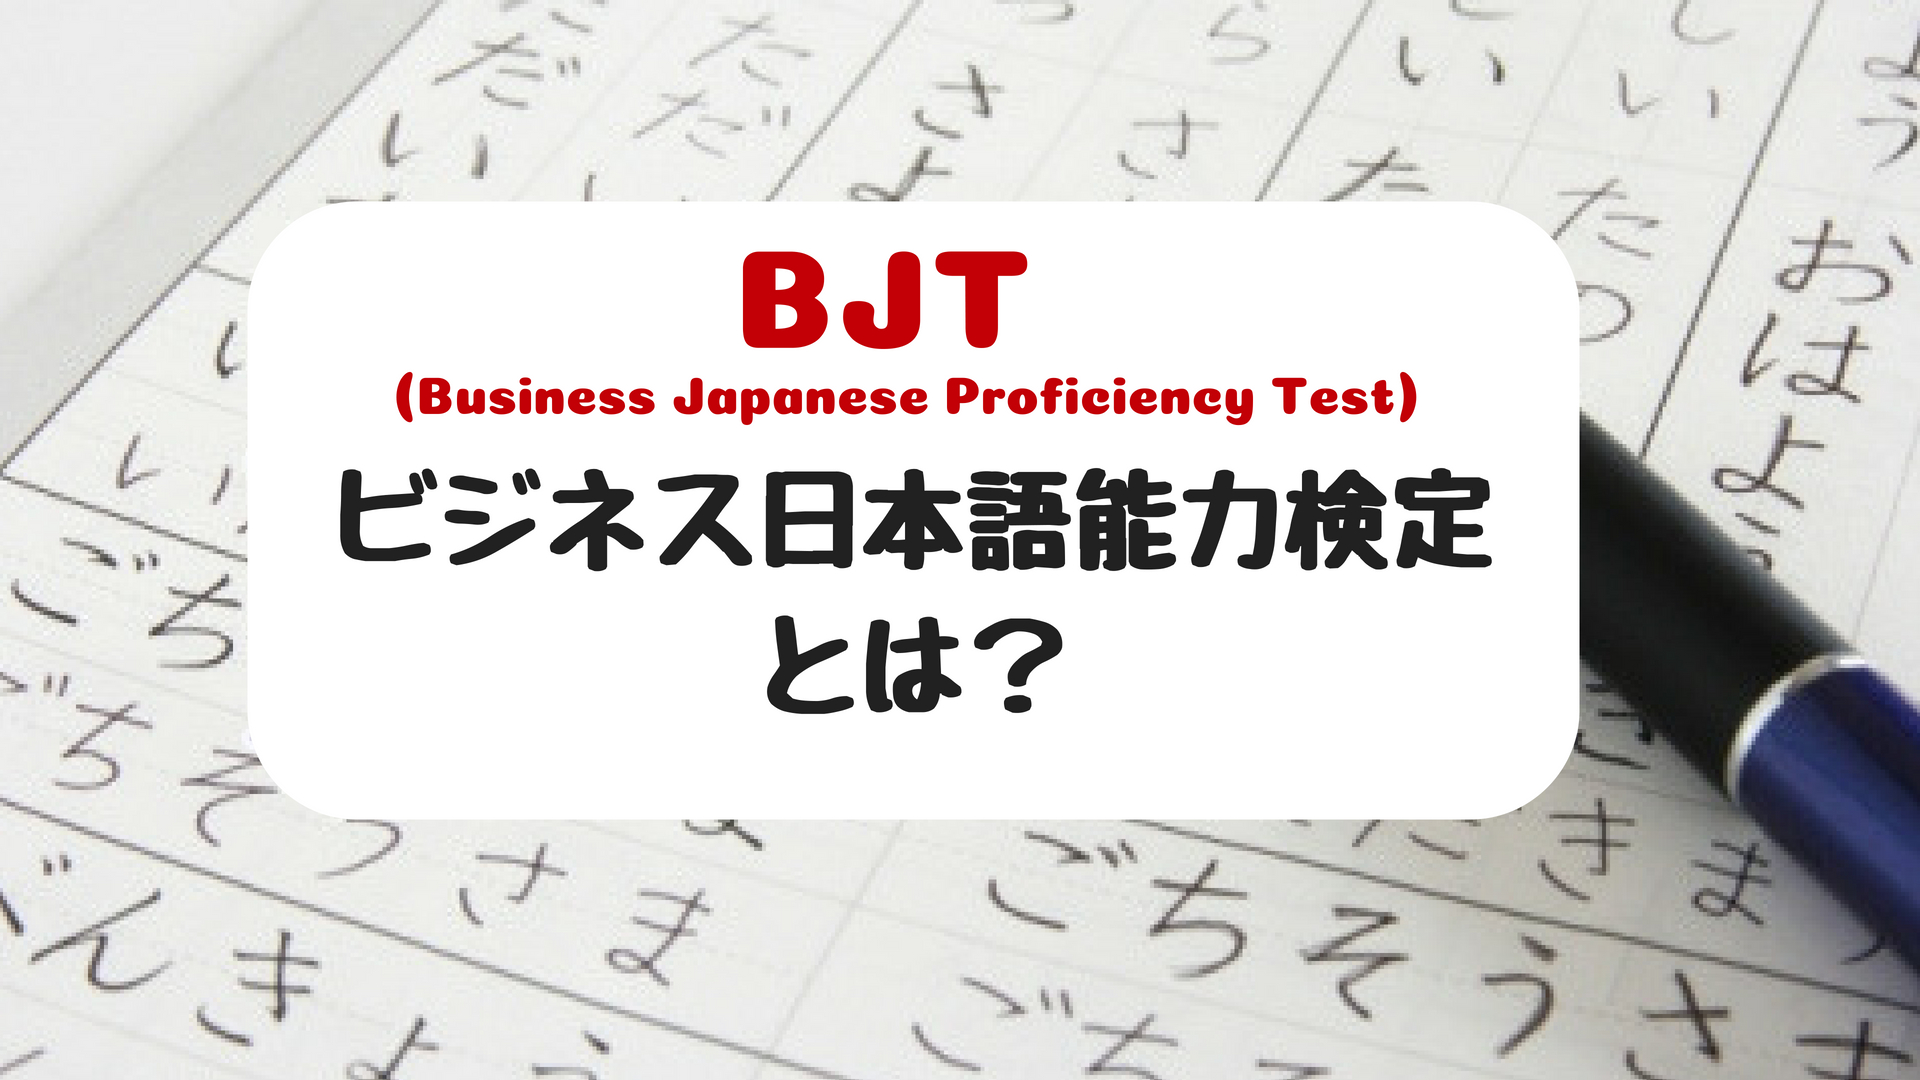 Giới thiệu về kỳ thi BJT – Business Japanese-Proficiency Test